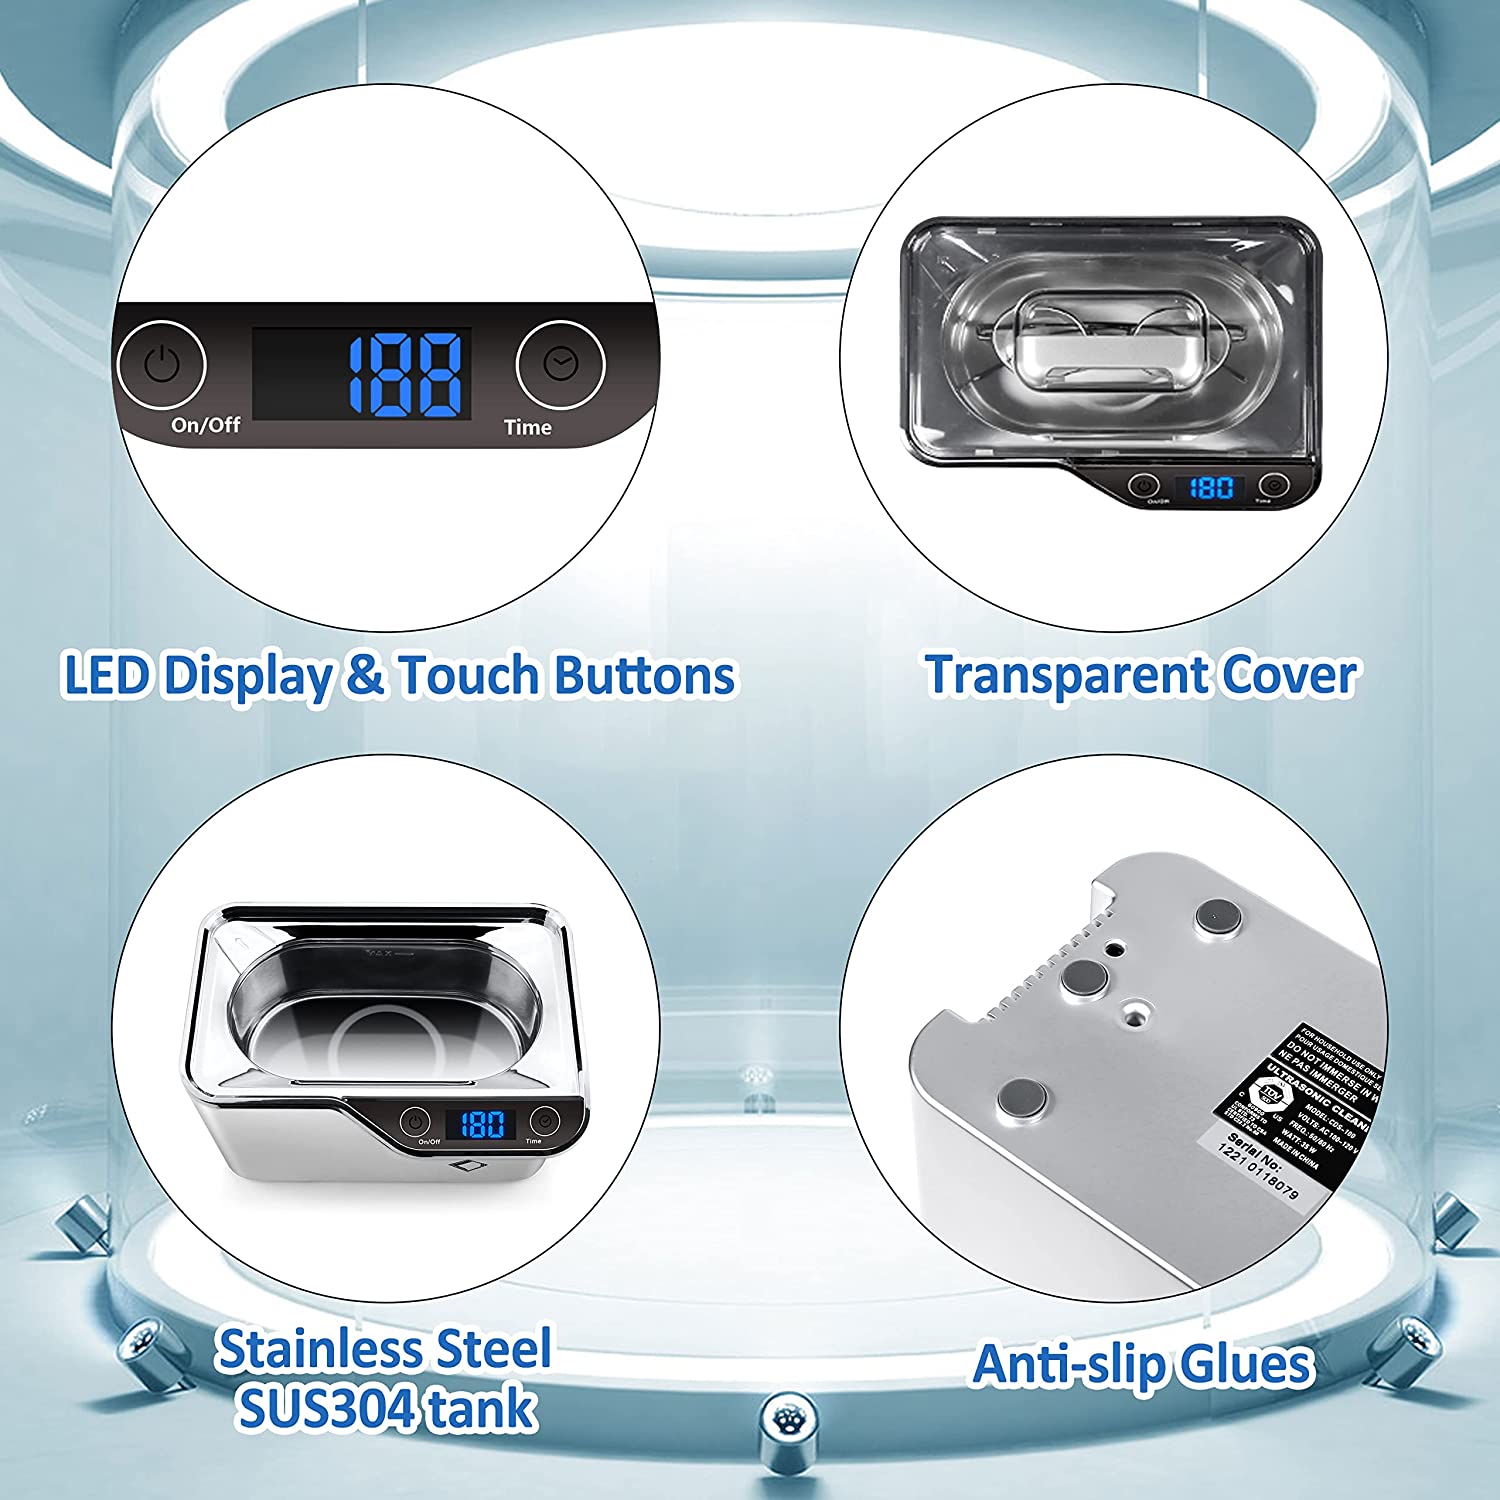 LifeBasis CDS-100 Ultrasonic Jewelry Cleaner 